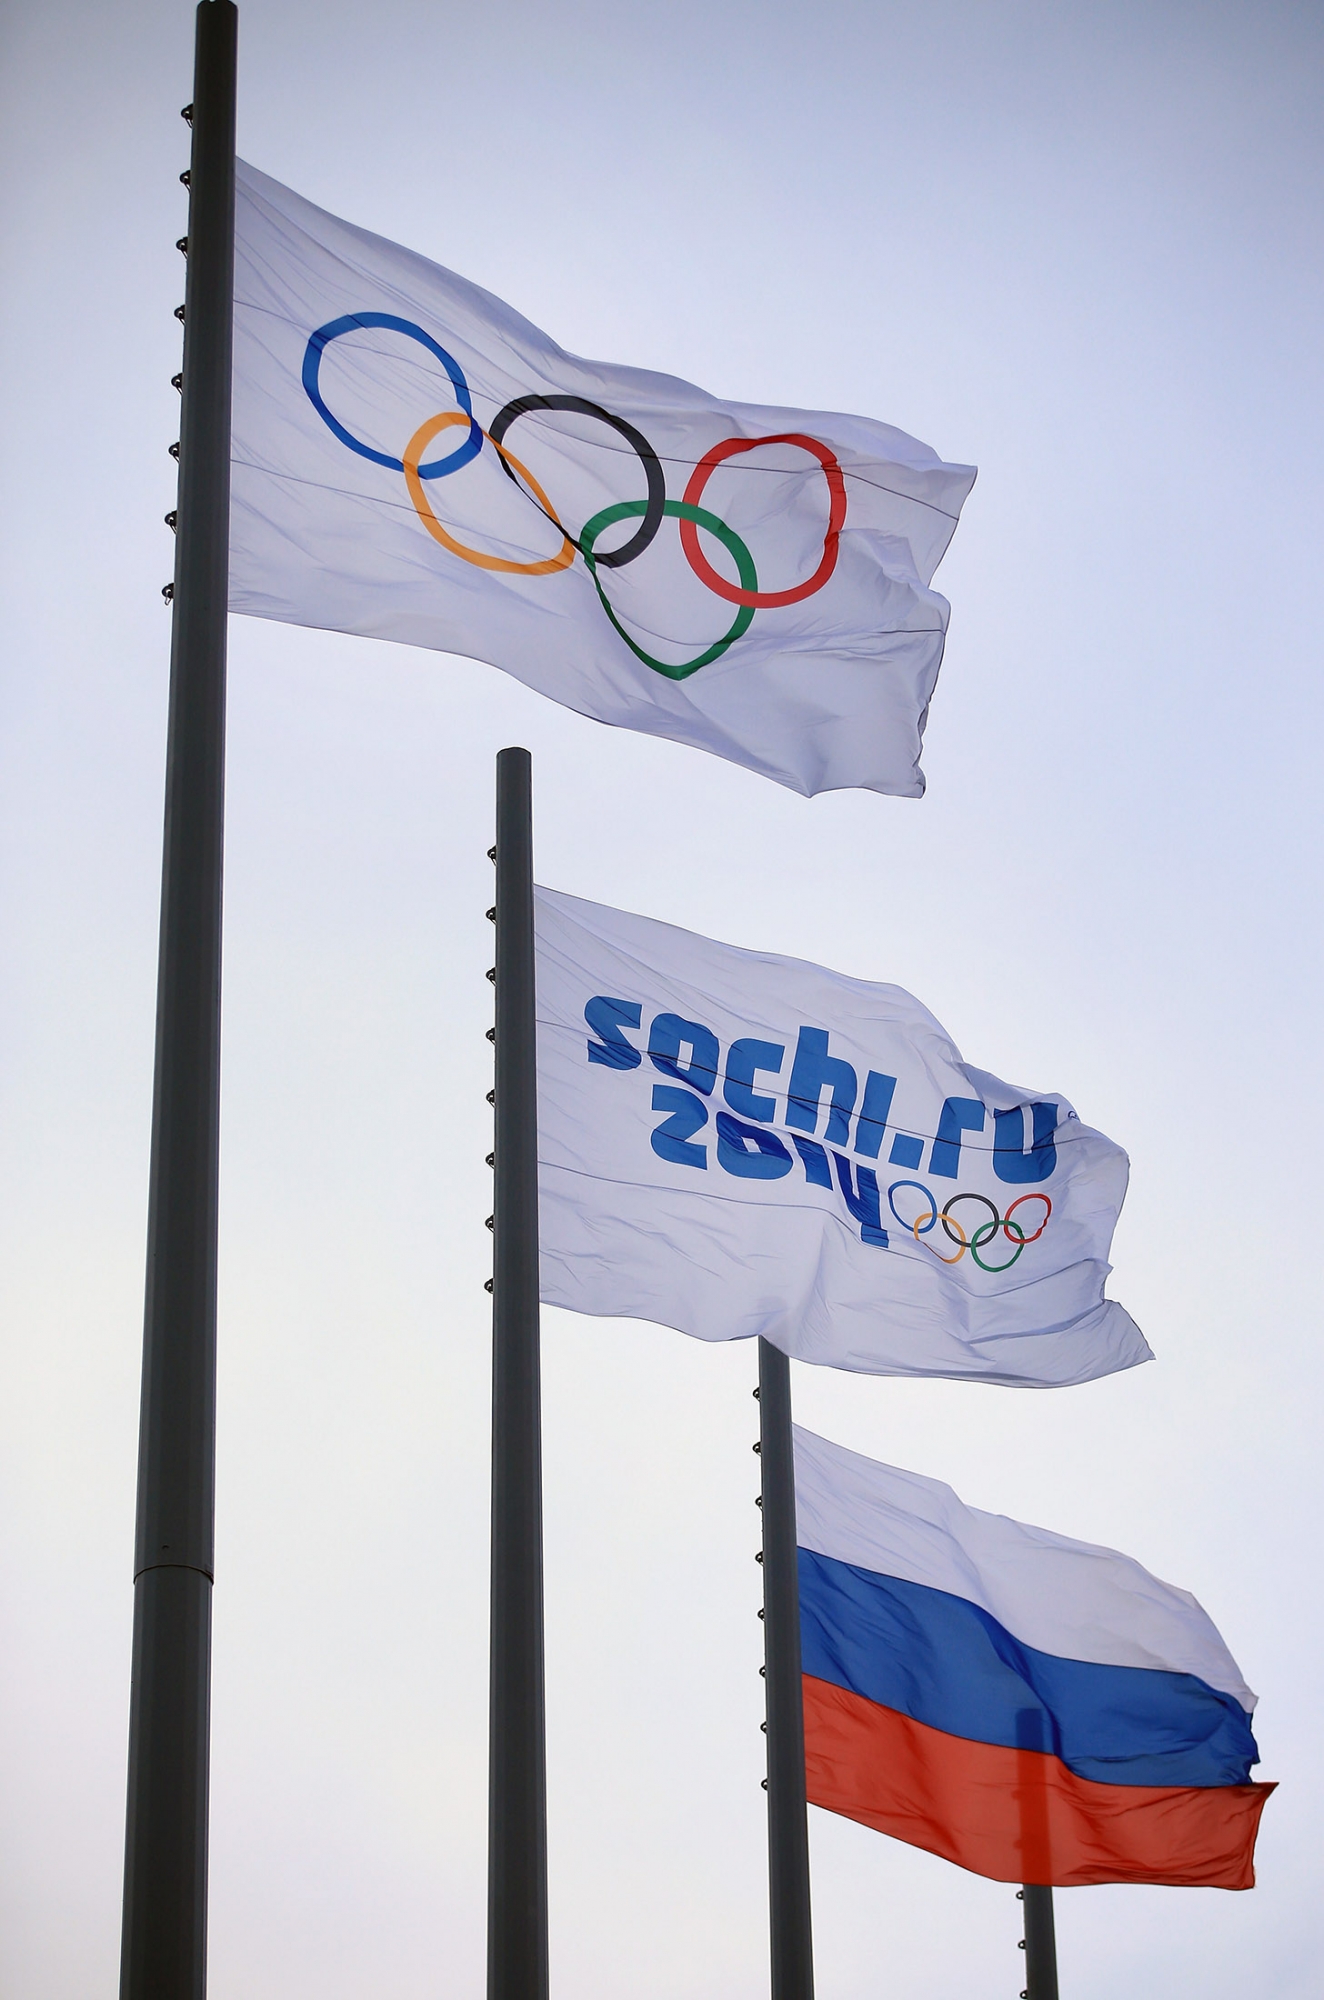 Флаг Олимпийских игр Сочи 2014